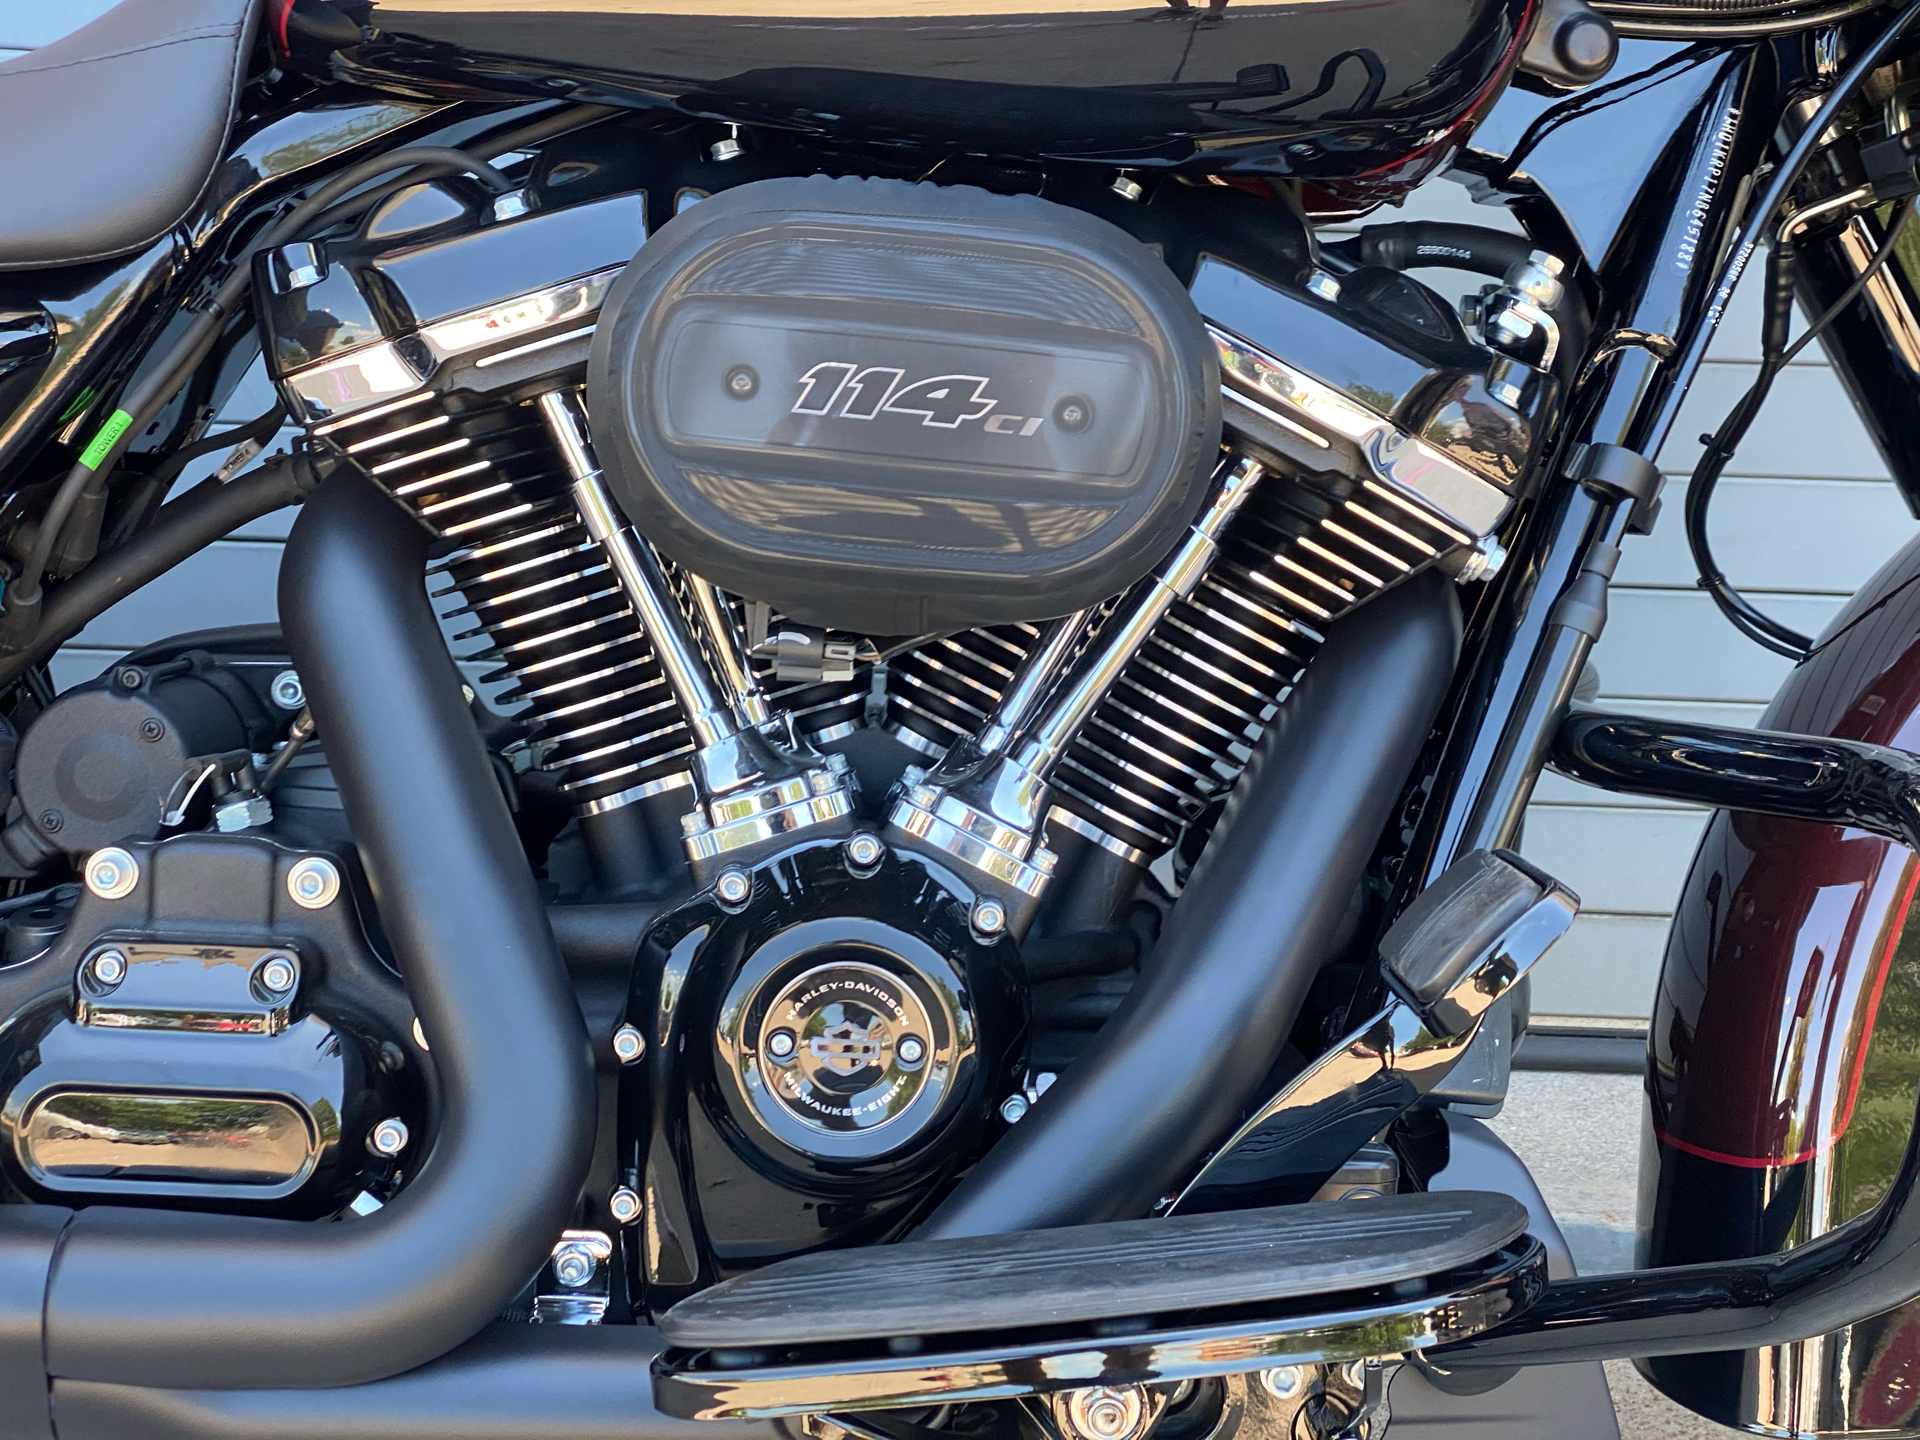 2022 Harley-Davidson Street Glide® Special in Grand Prairie, Texas - Photo 6